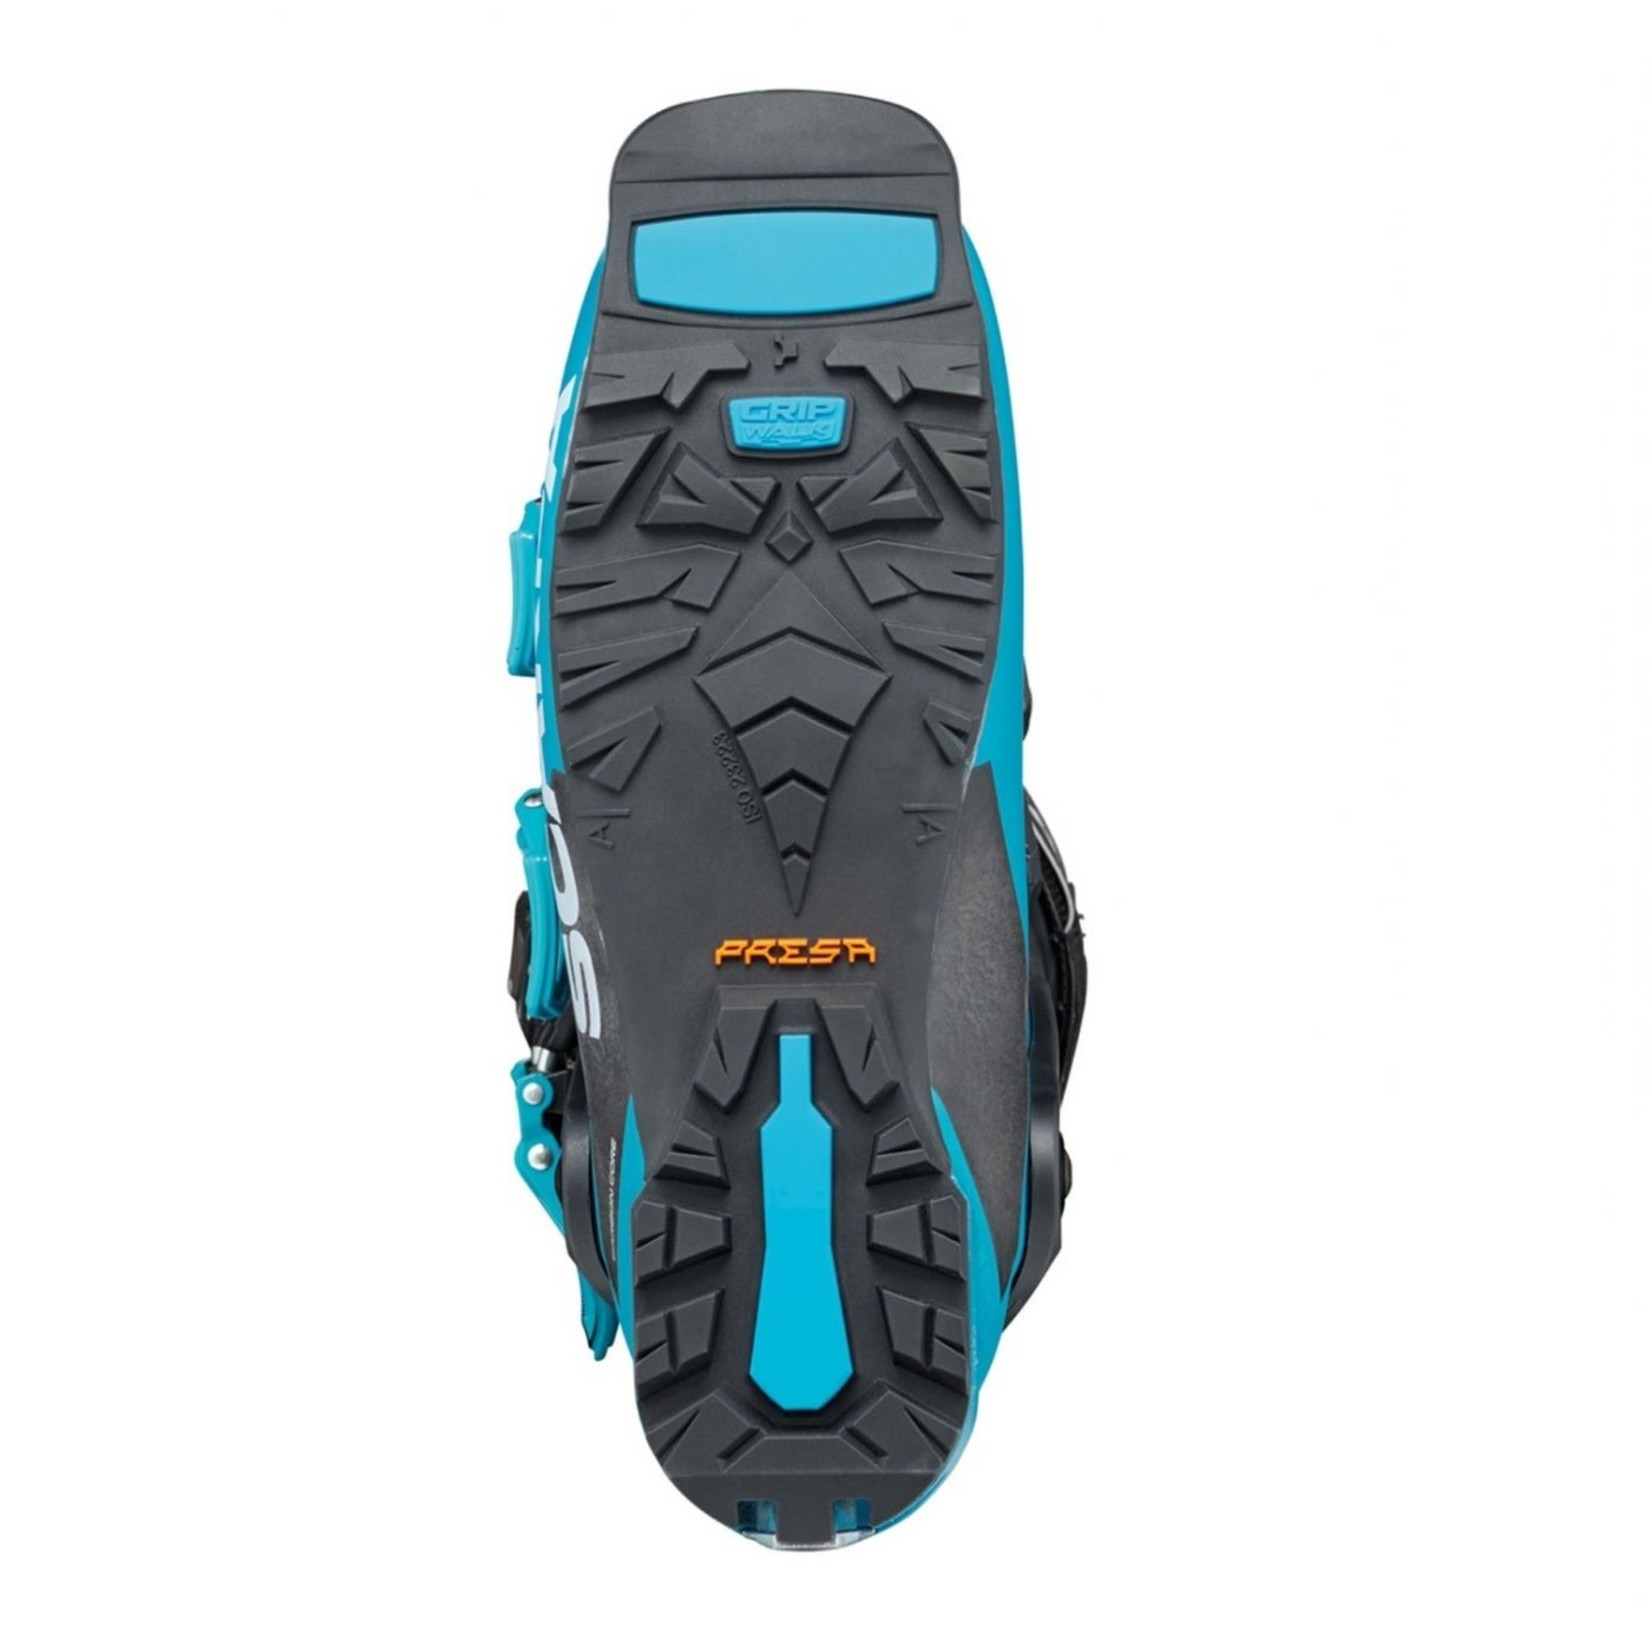 Scarpa Scarpa 4-Quattro XT Ski Boot - Men